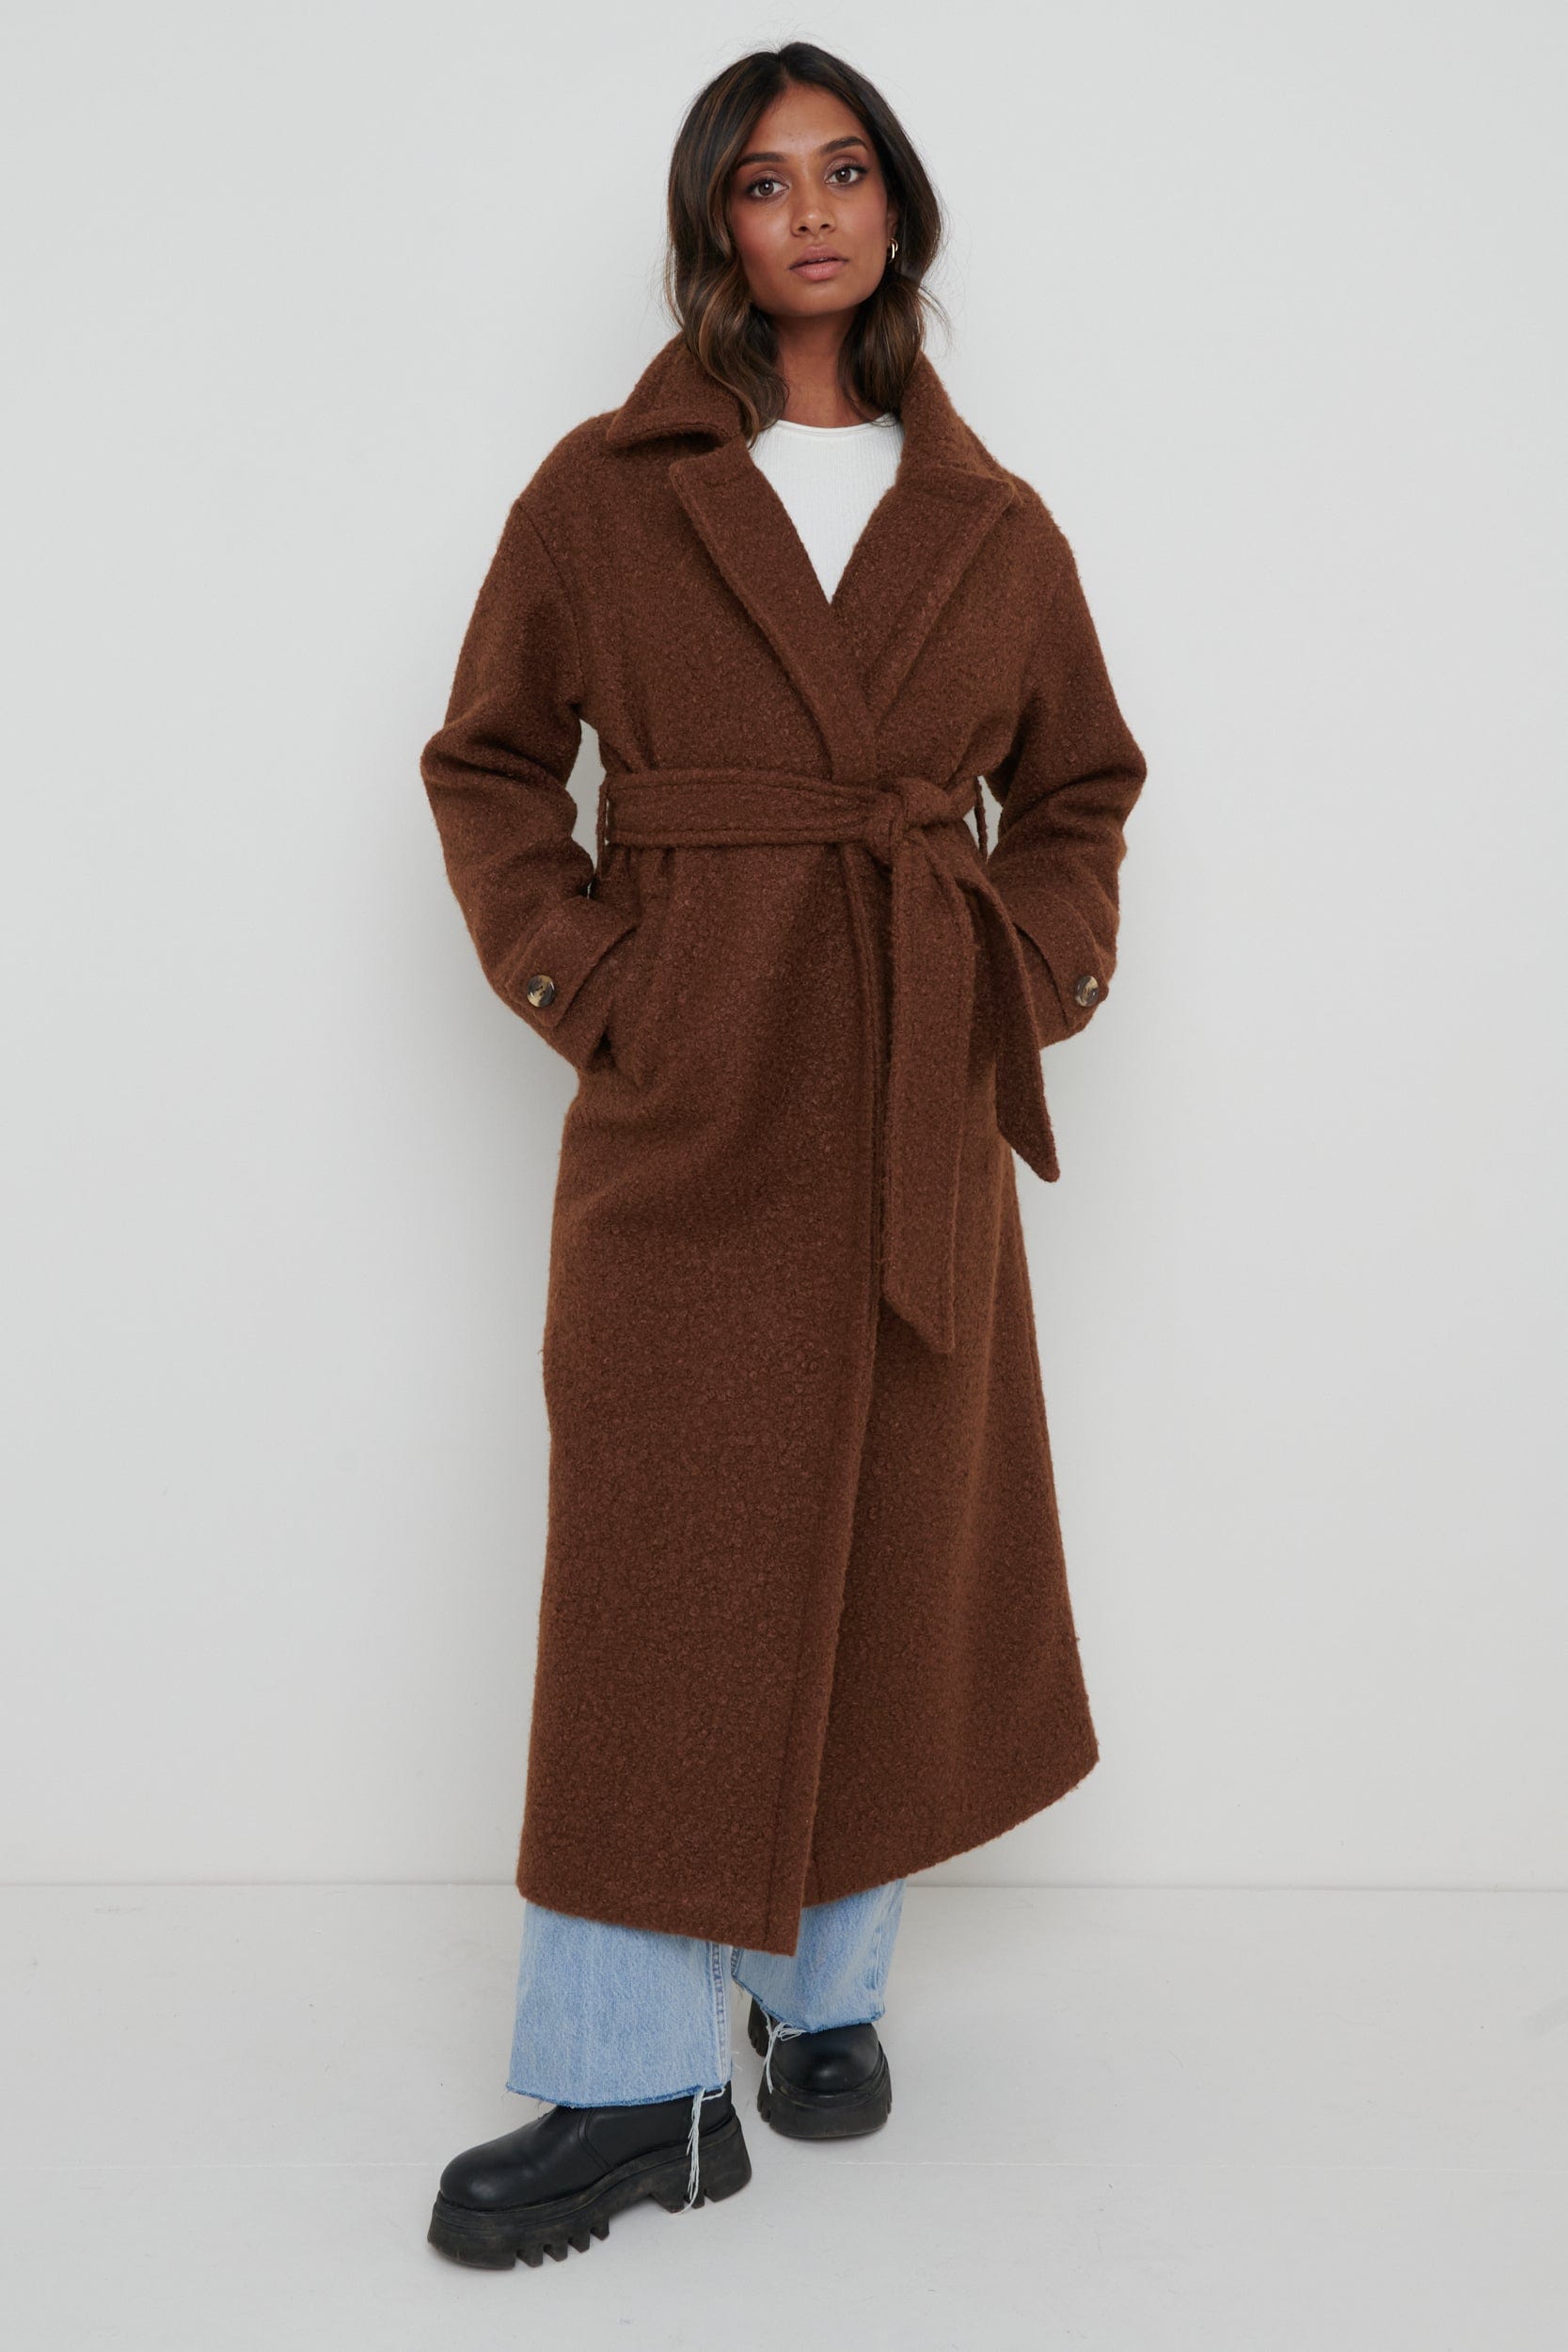 Grayson Boucle Oversized Coat - Brown, L